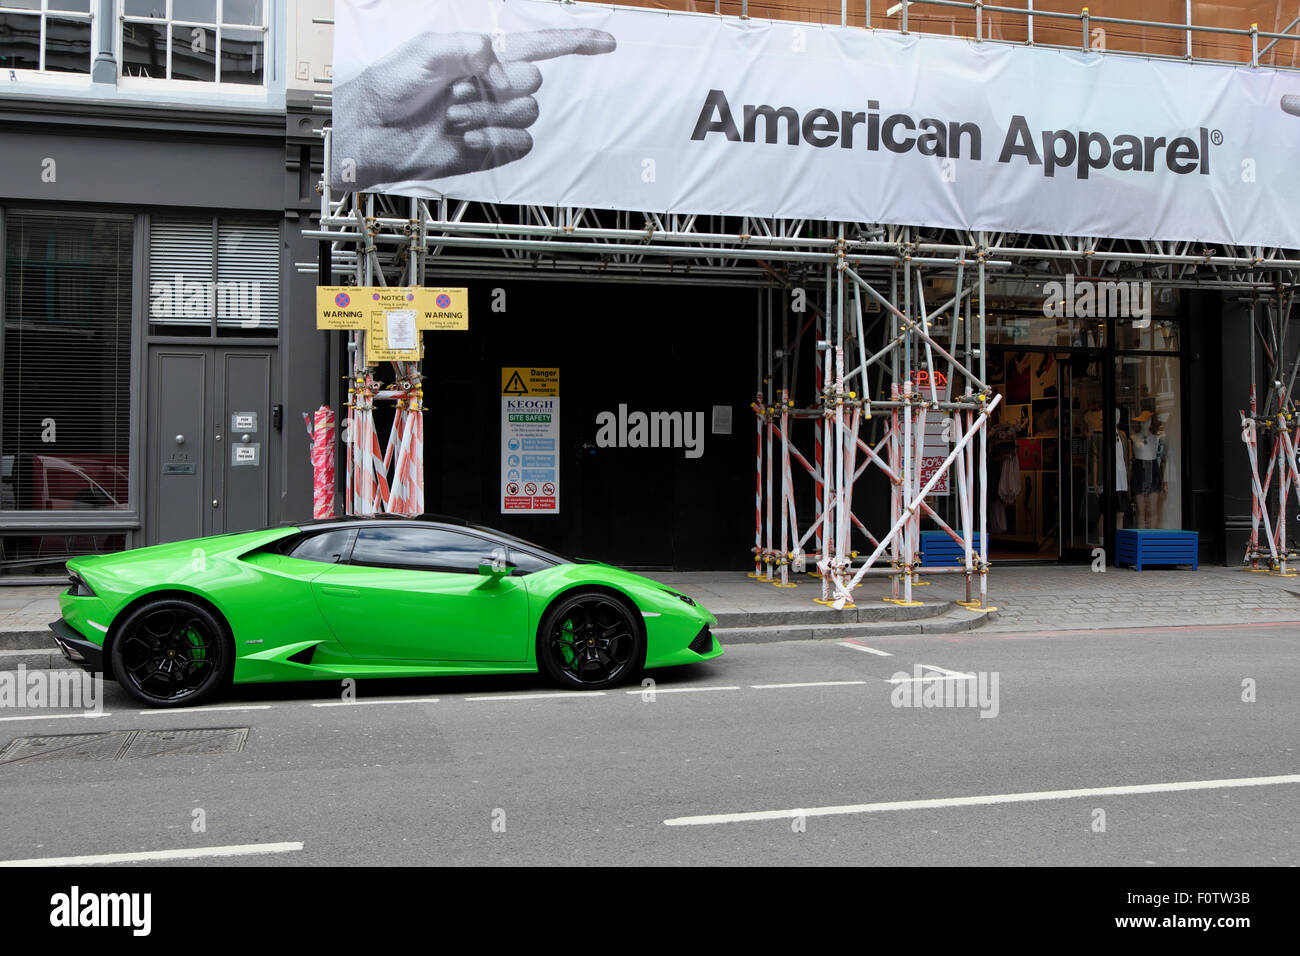 Green Lamborghini parked outside American Apparel shop London, UK   KATHY DEWITT Stock Photo